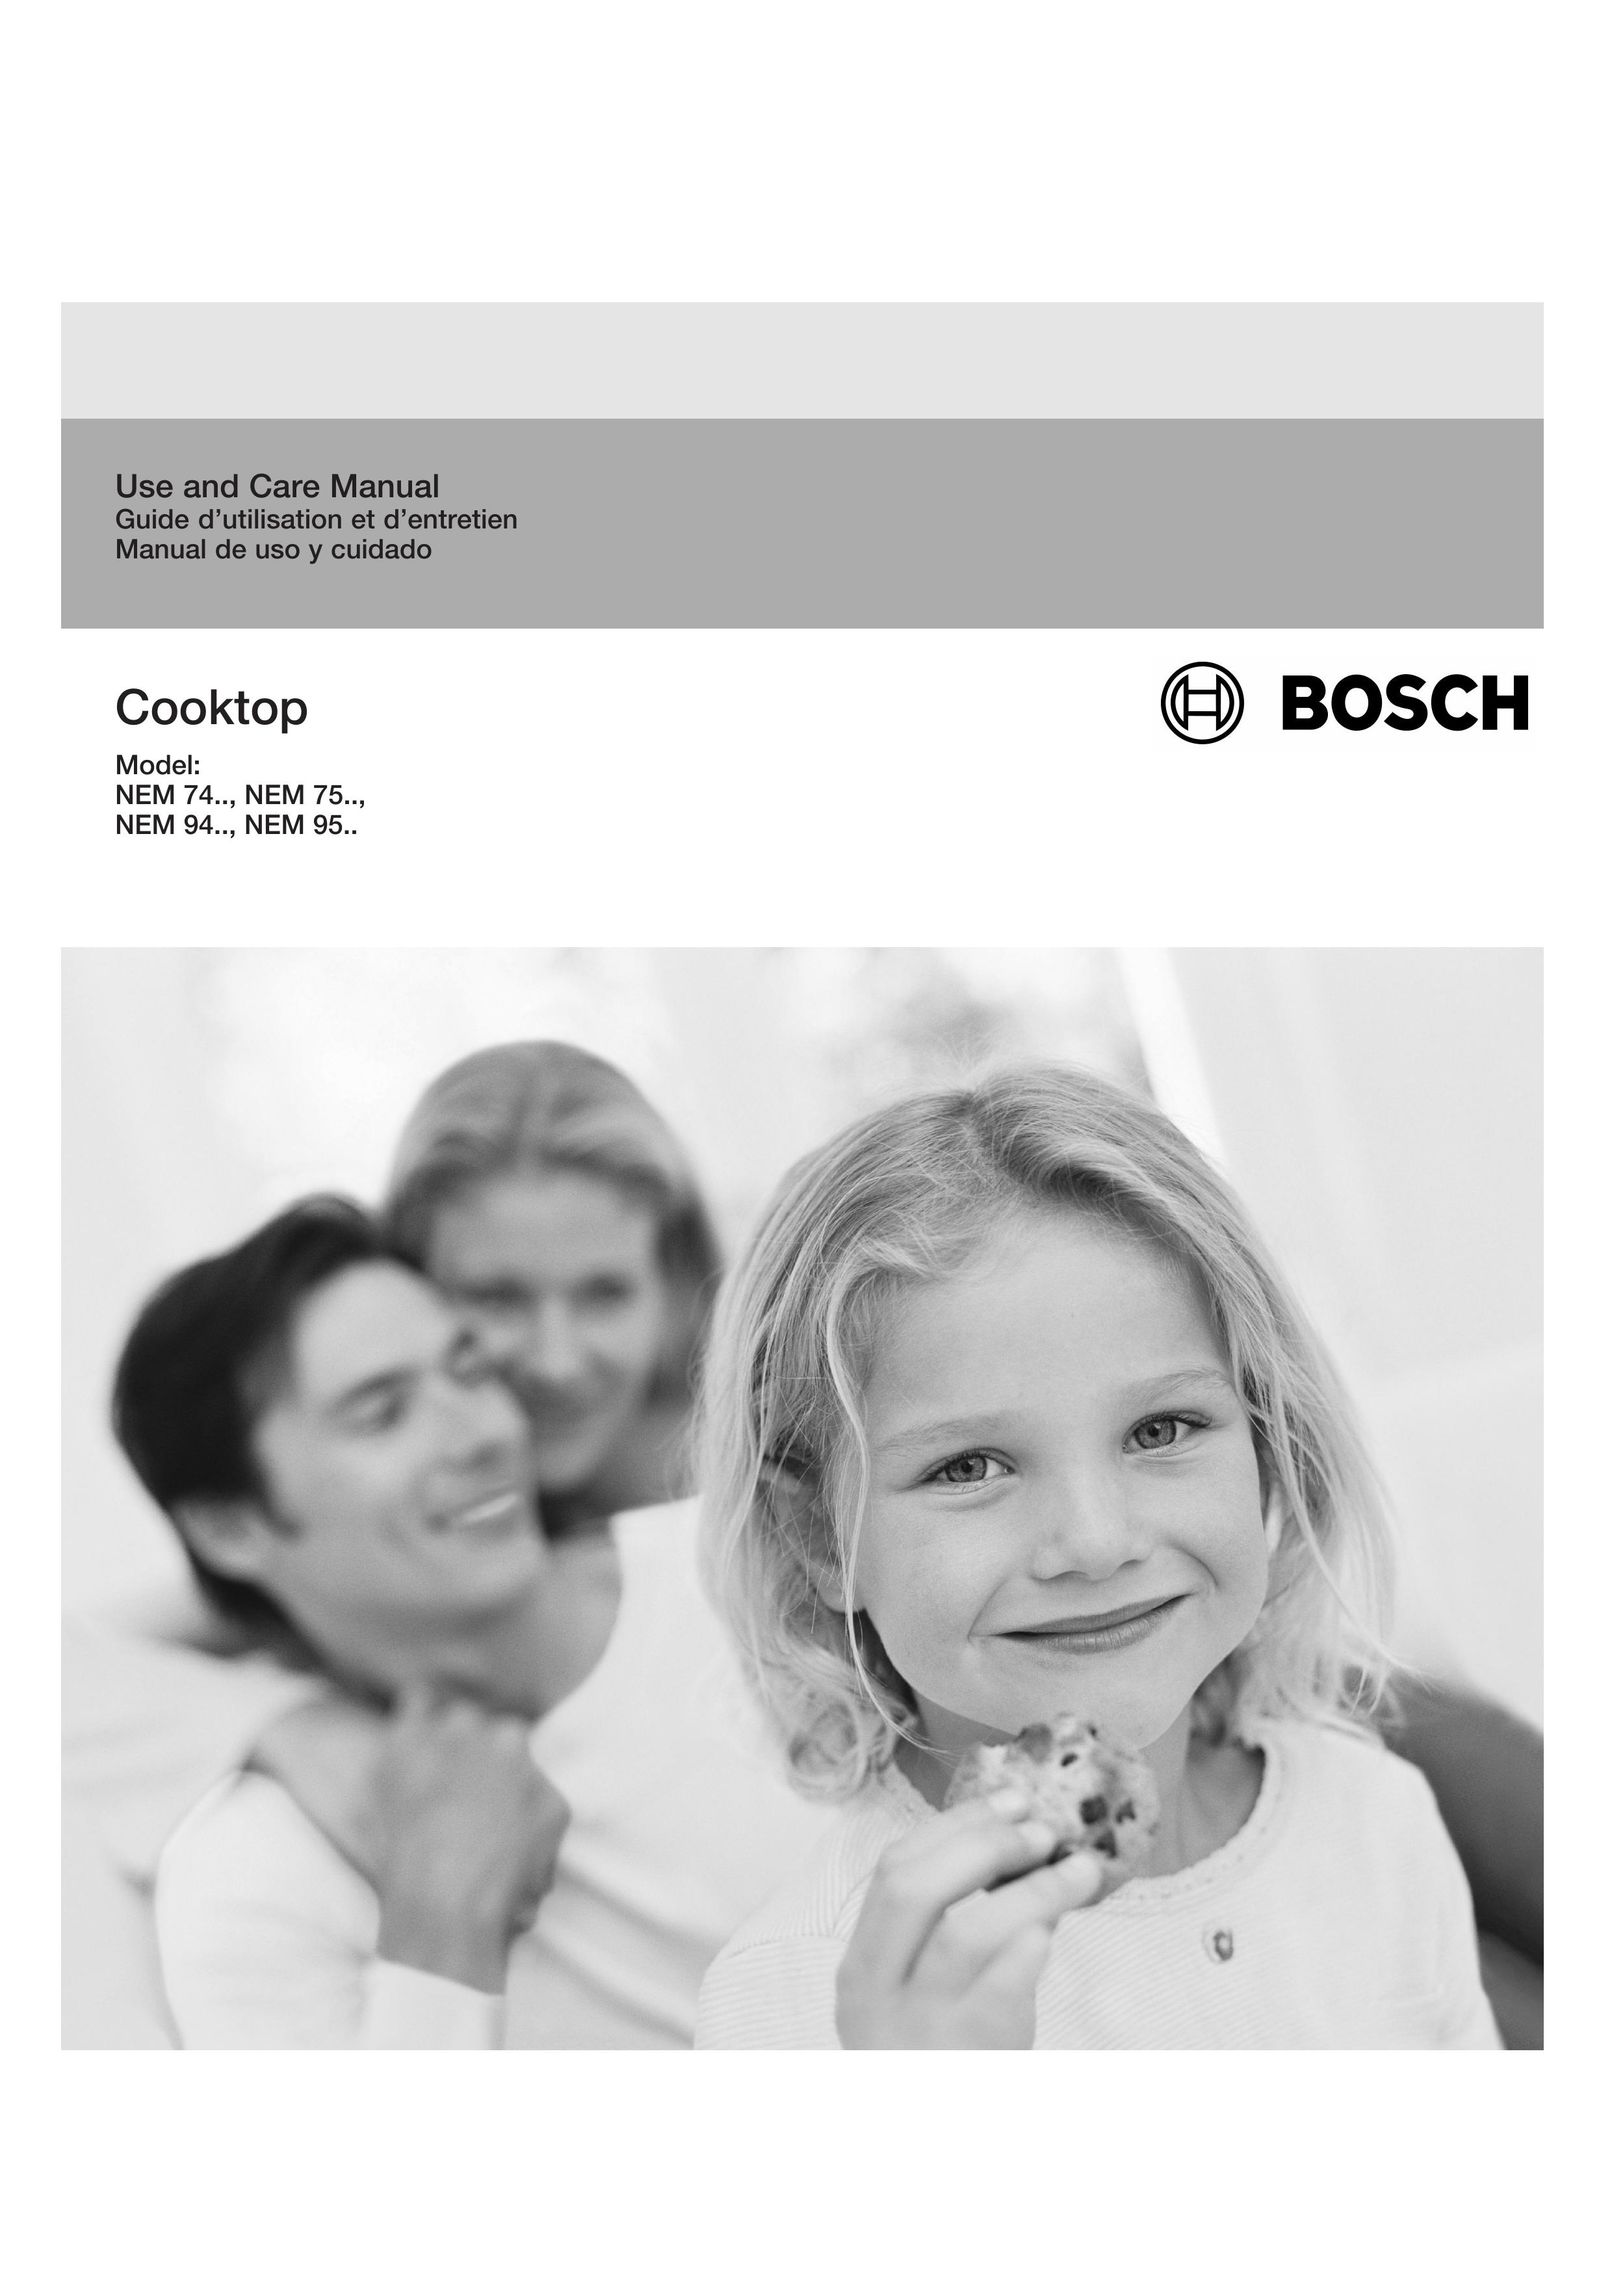 Bosch Appliances NEM 75 Cooktop User Manual